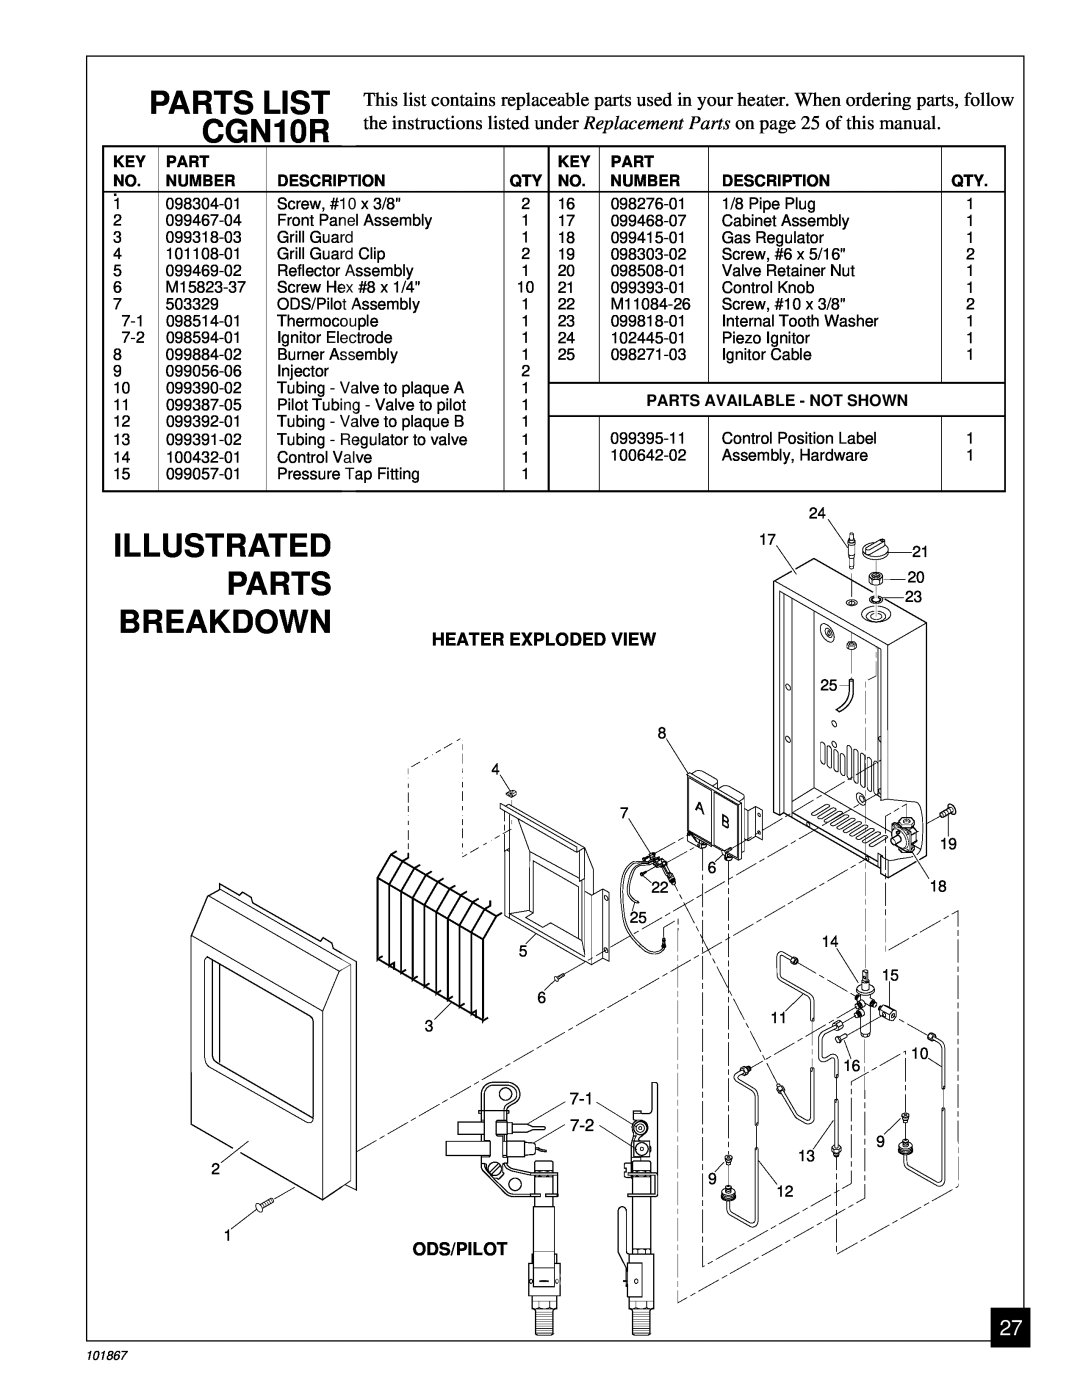 Desa Illustrated Parts Breakdown, PARTS LIST CGN10R, Number, Description, Parts Available - Not Shown, GRHpv013.U 